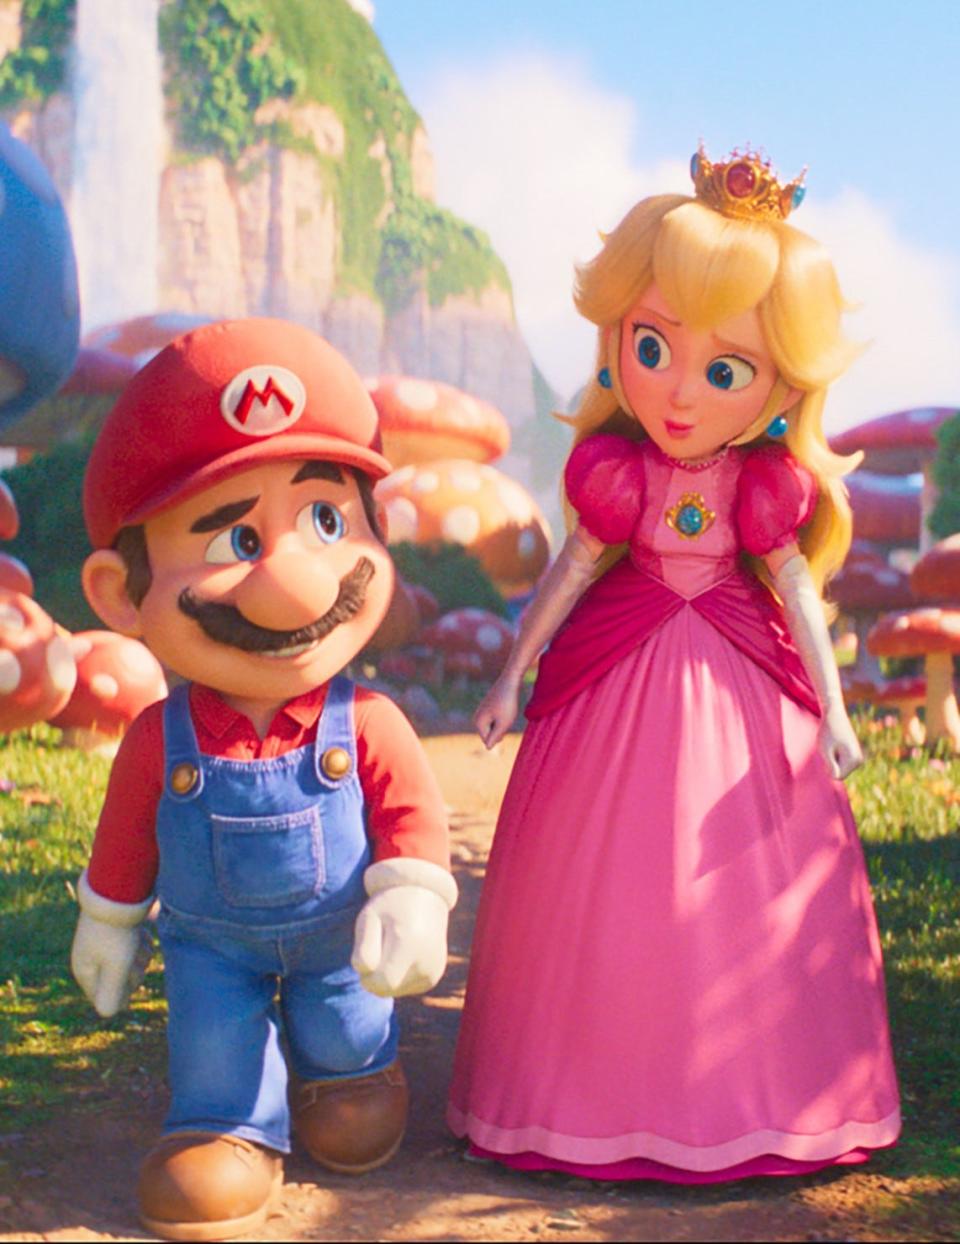 Mario (Chris Pratt) and Princess Peach (Anya Taylor-Joy) share a moment in Nintendo and Illumination’s "The Super Mario Bros. Movie."